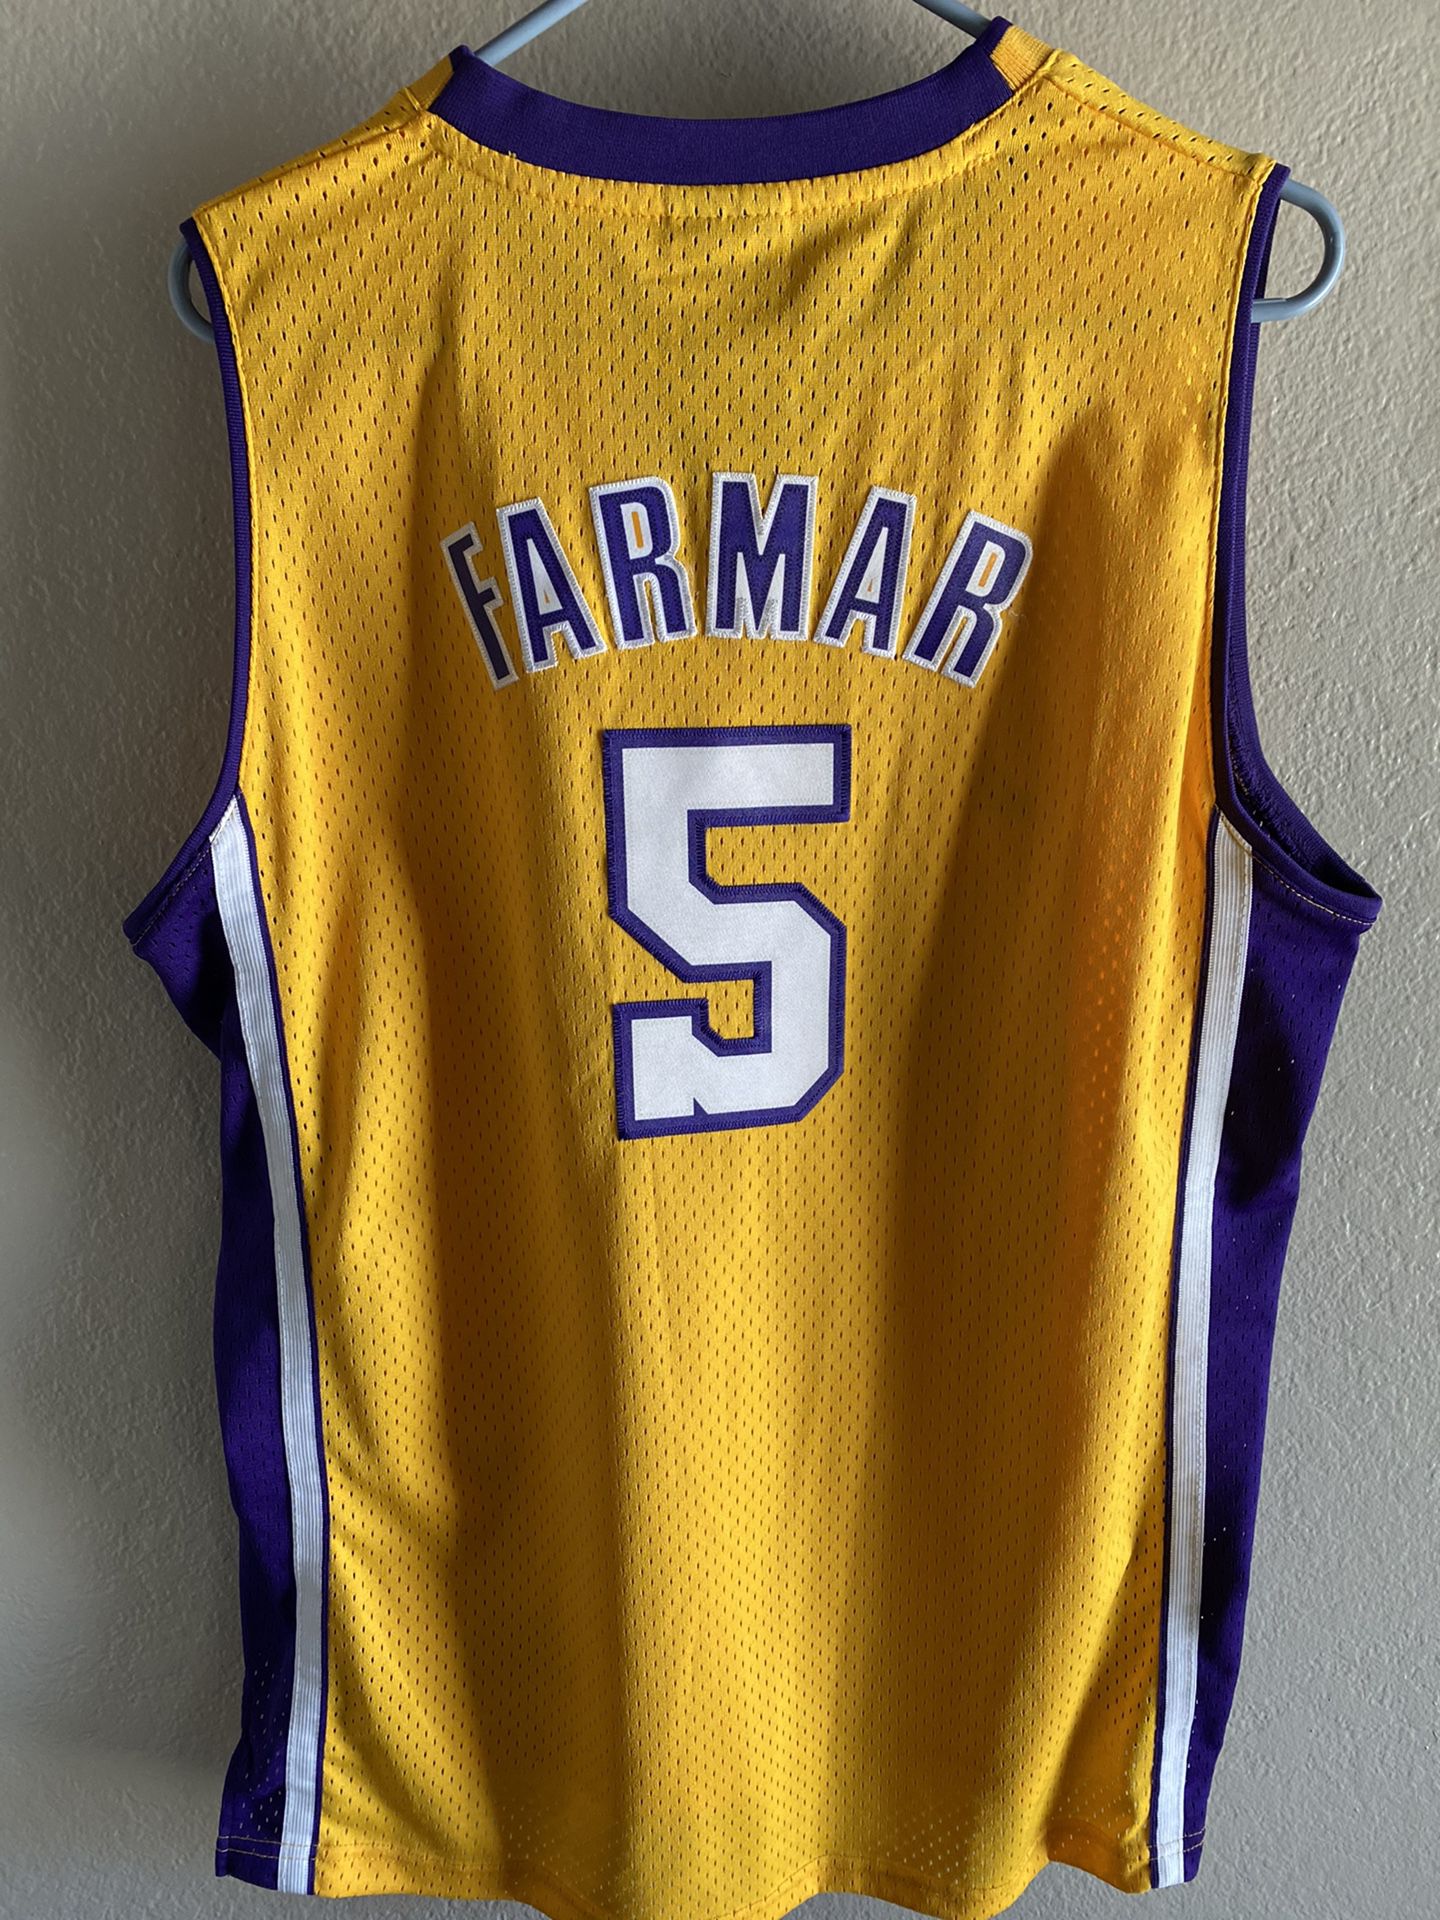 Adidas NBA Los Angeles Lakers Jordan Farmar #5 Jersey Size Youth M (10-12).